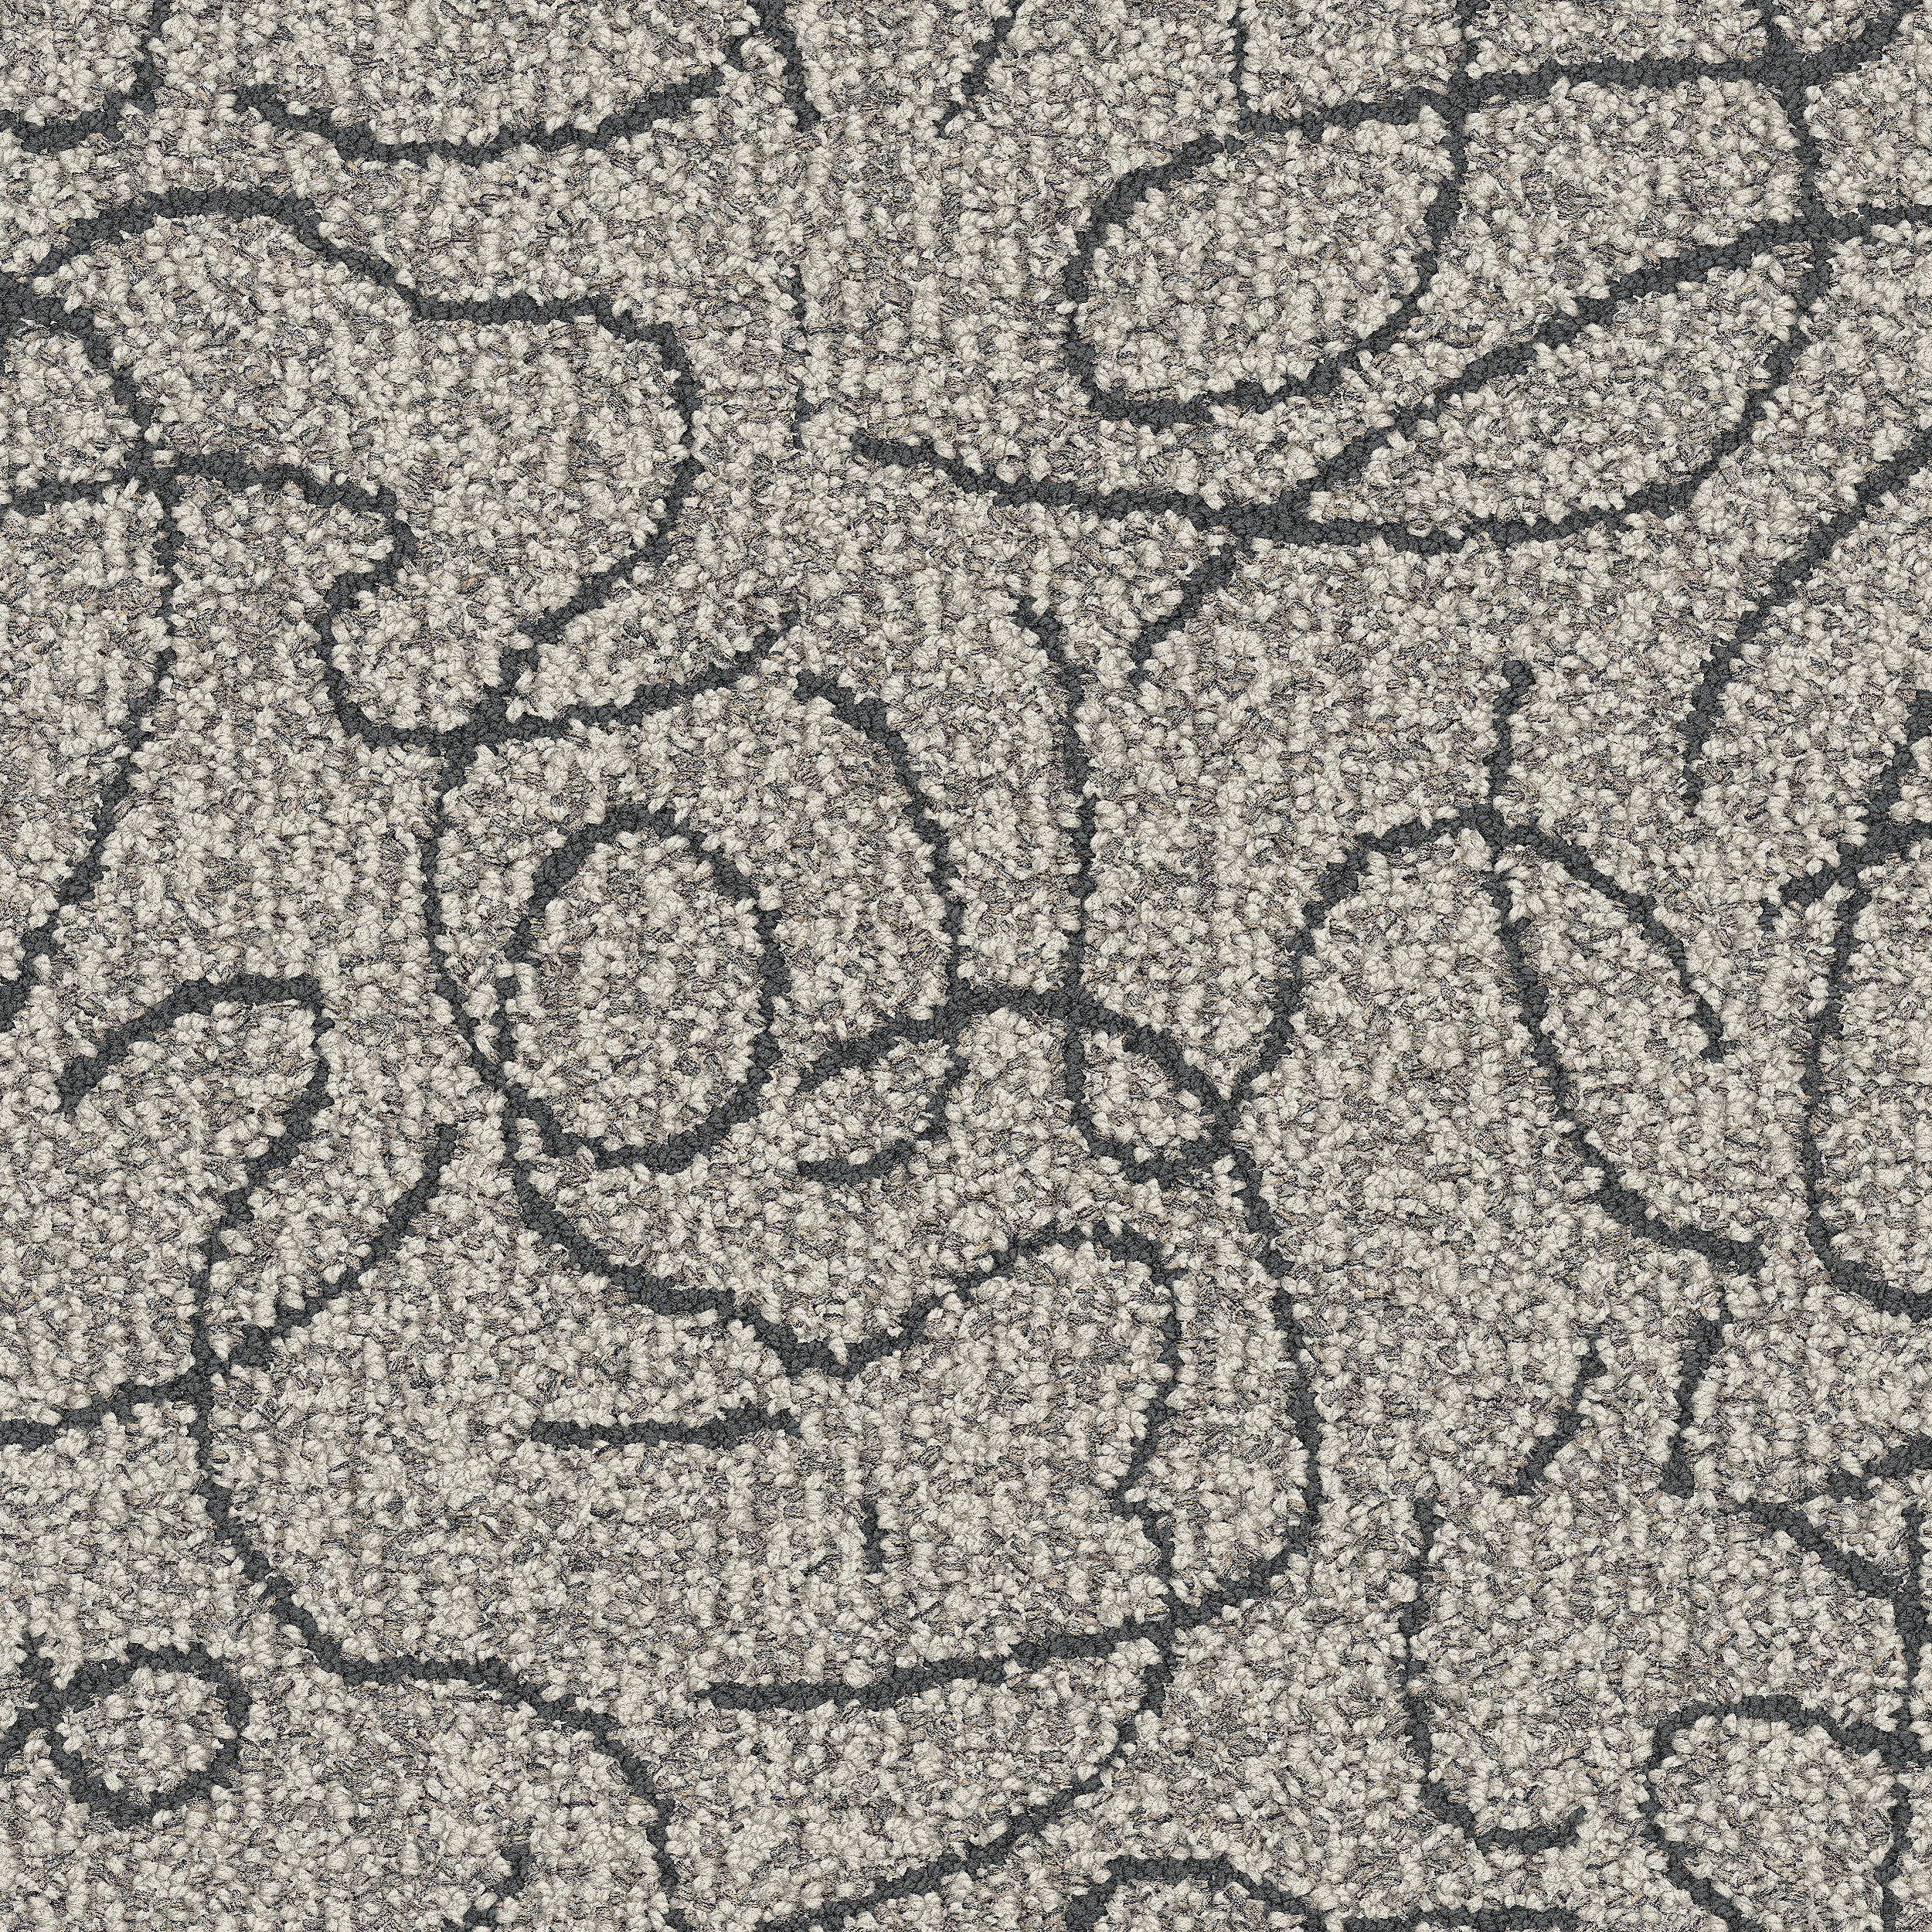 Unspooled carpet tile in Oyster Bildnummer 4